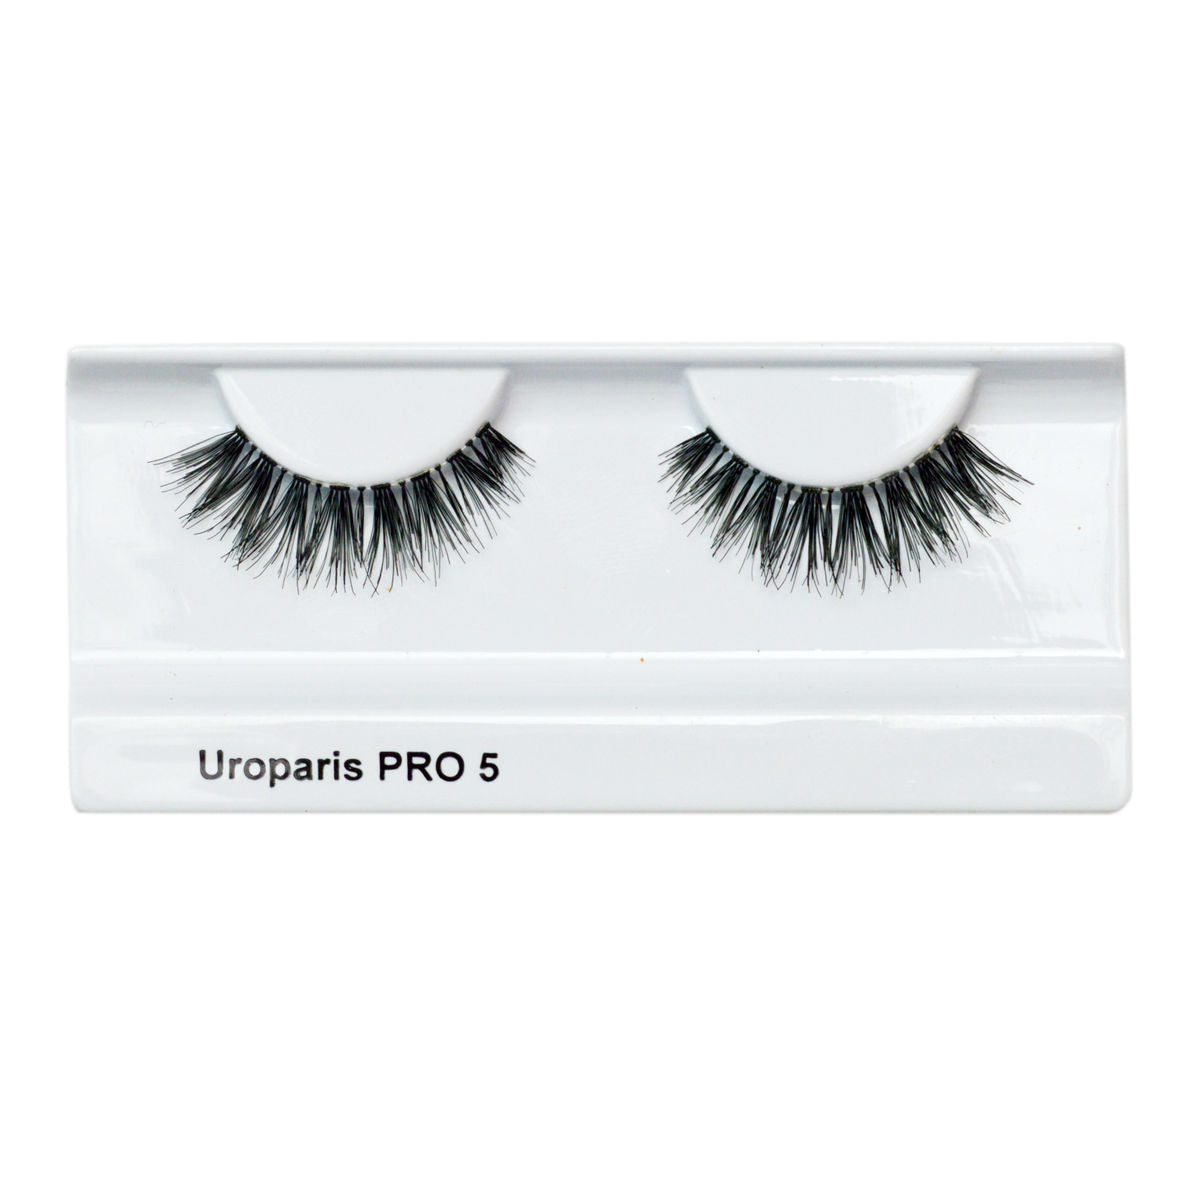 Uroparis Eyelashes Pro 5 Black  (1 pair) Uroparis